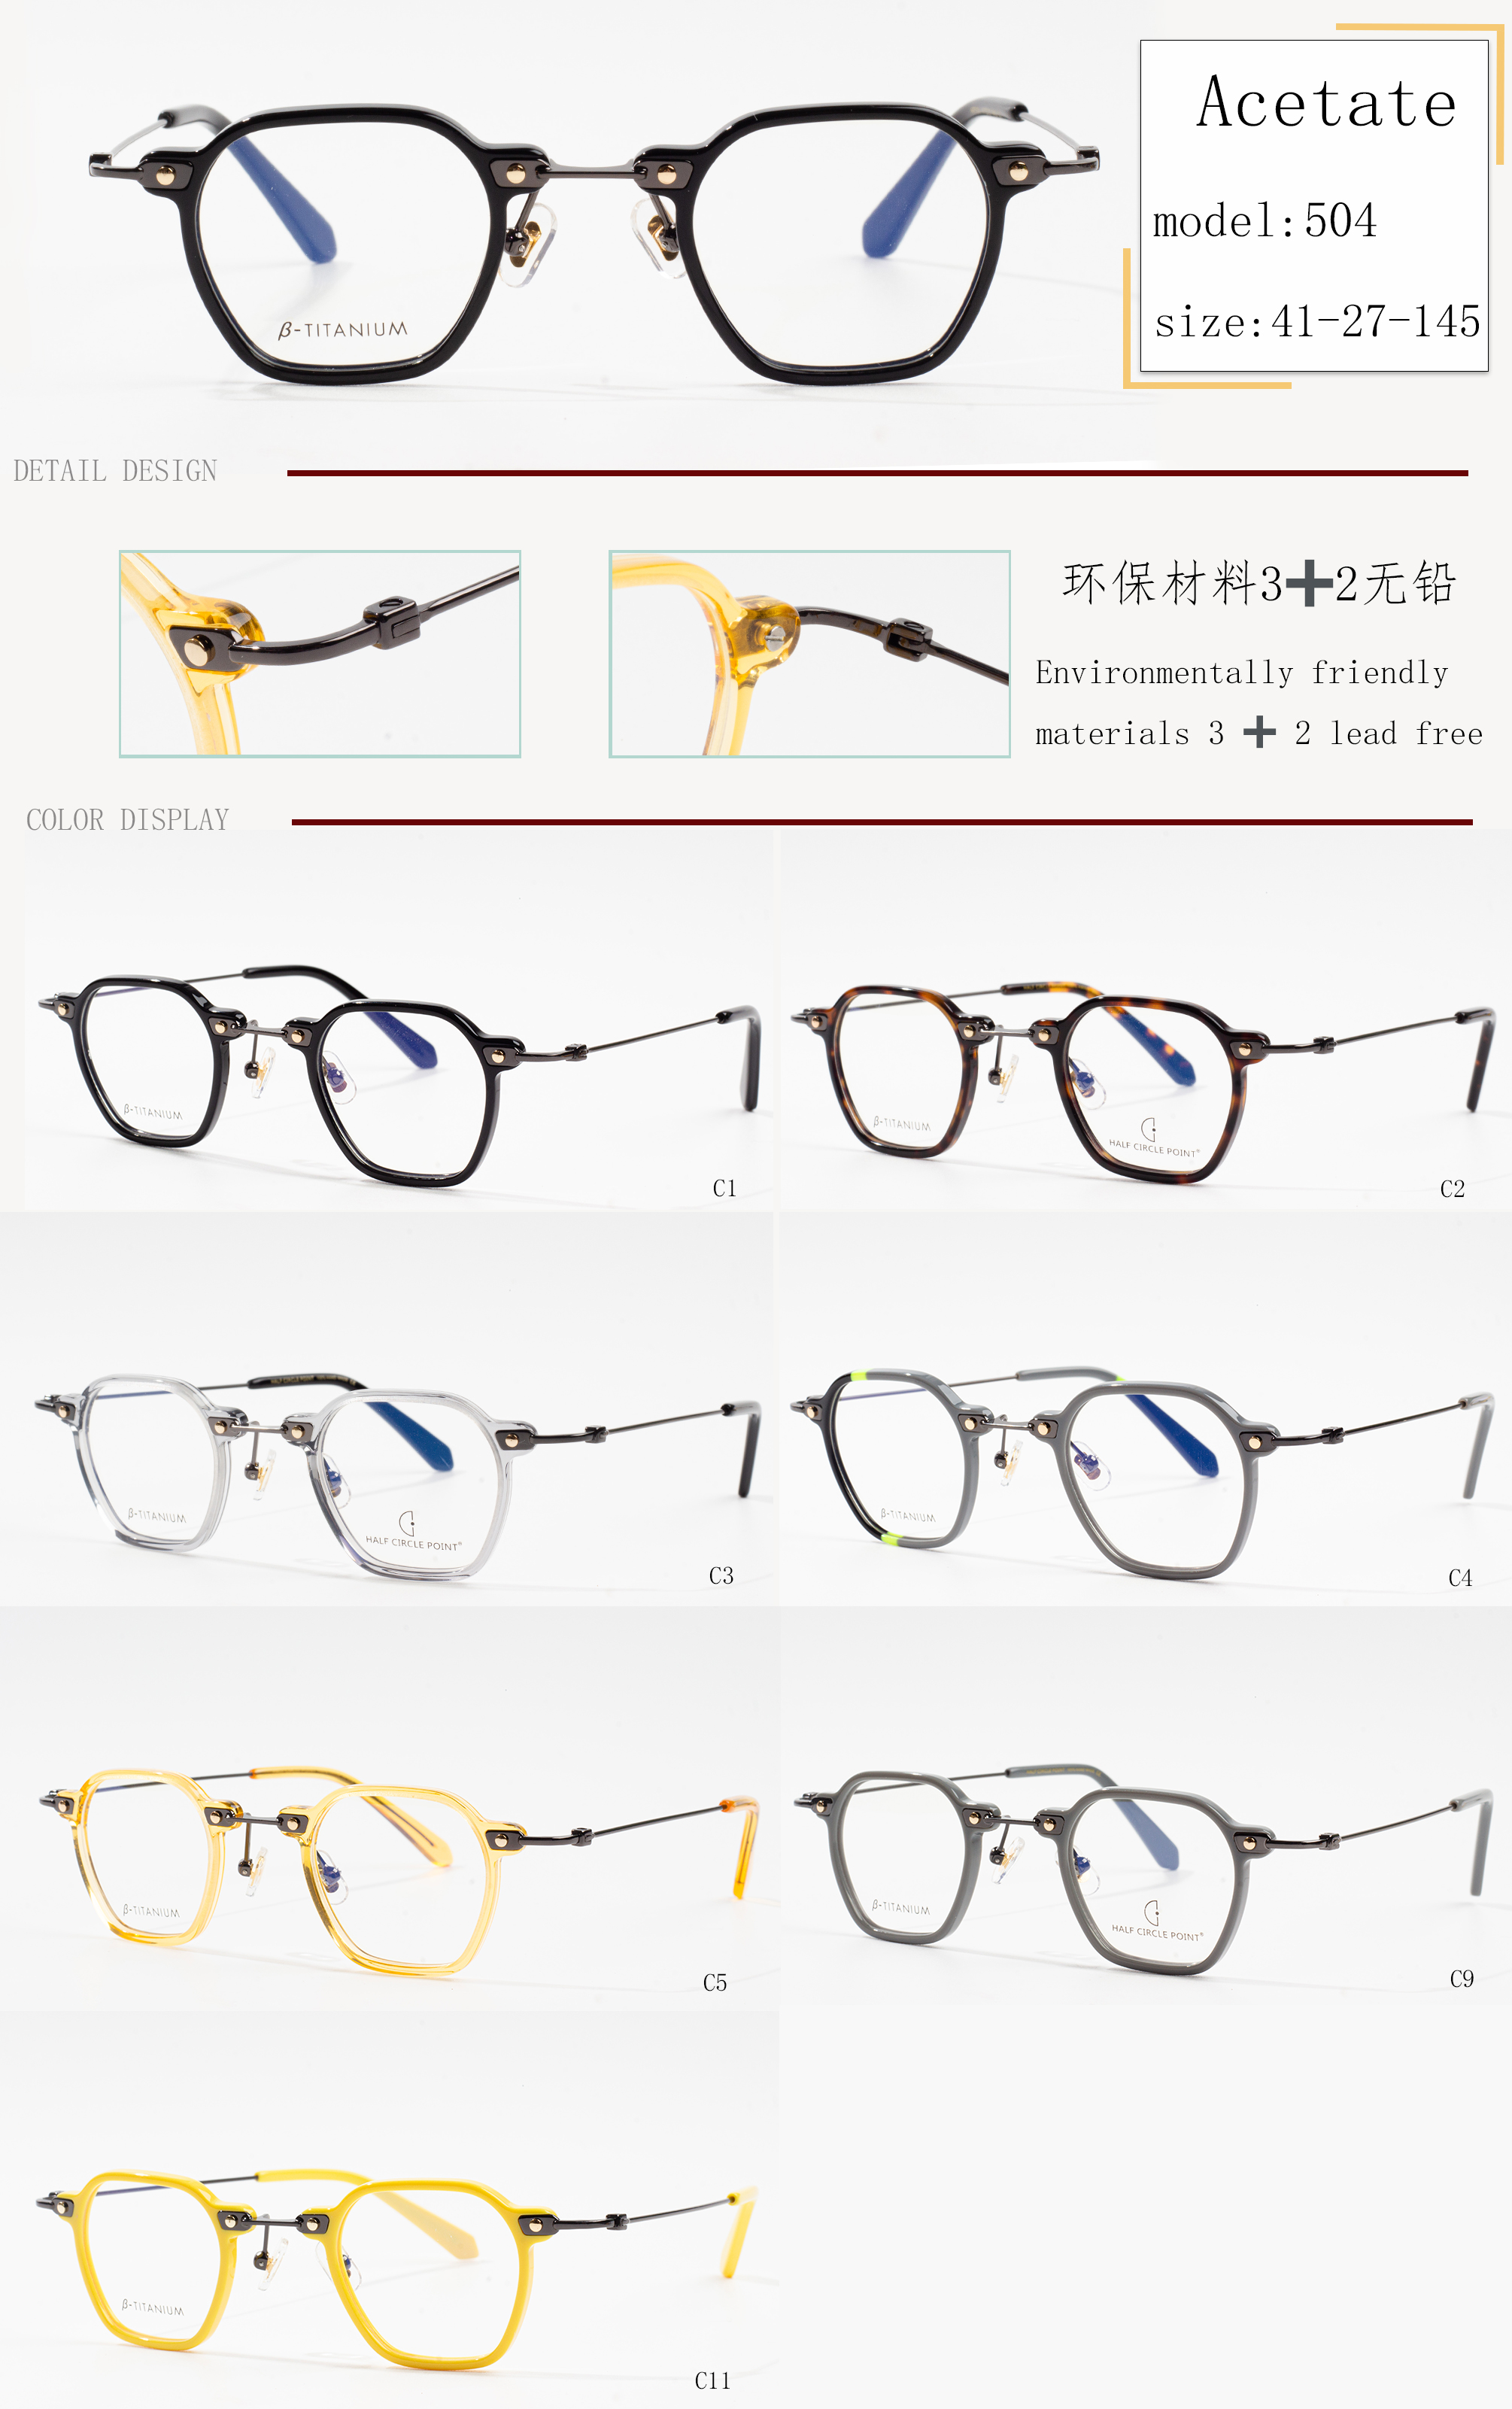 most durable eyeglass frames